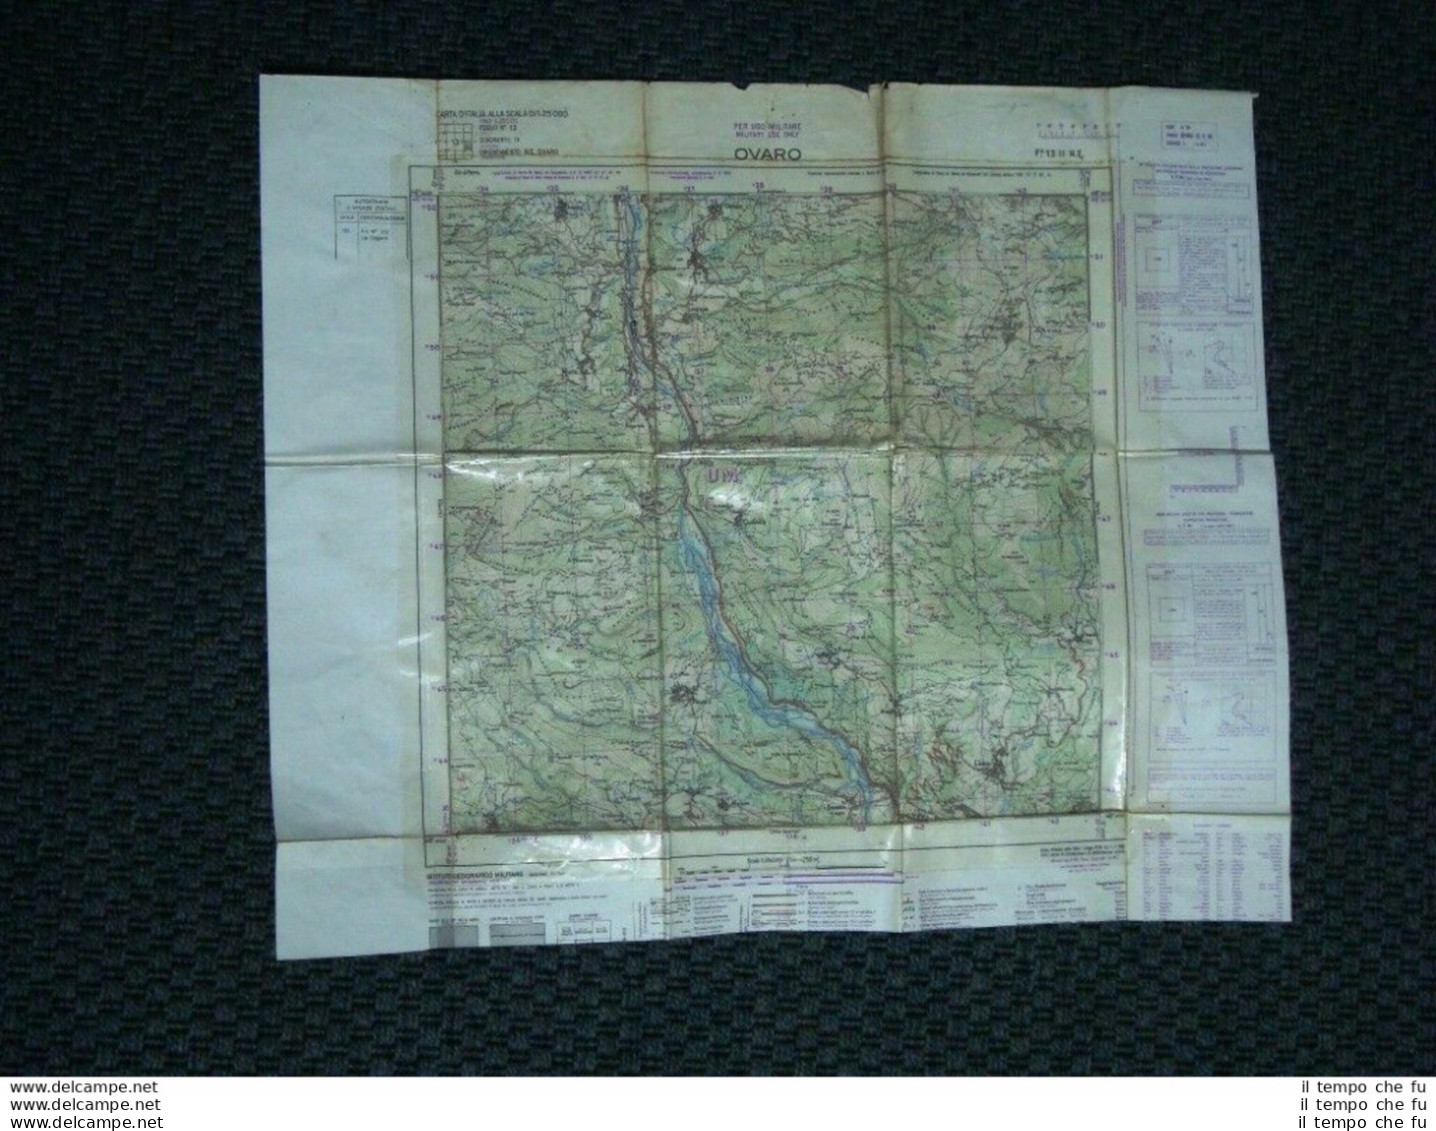 Grande Carta Topografica Ovaro O Davar Udine Friuli Dettagliatissima I.G.M - Geographical Maps